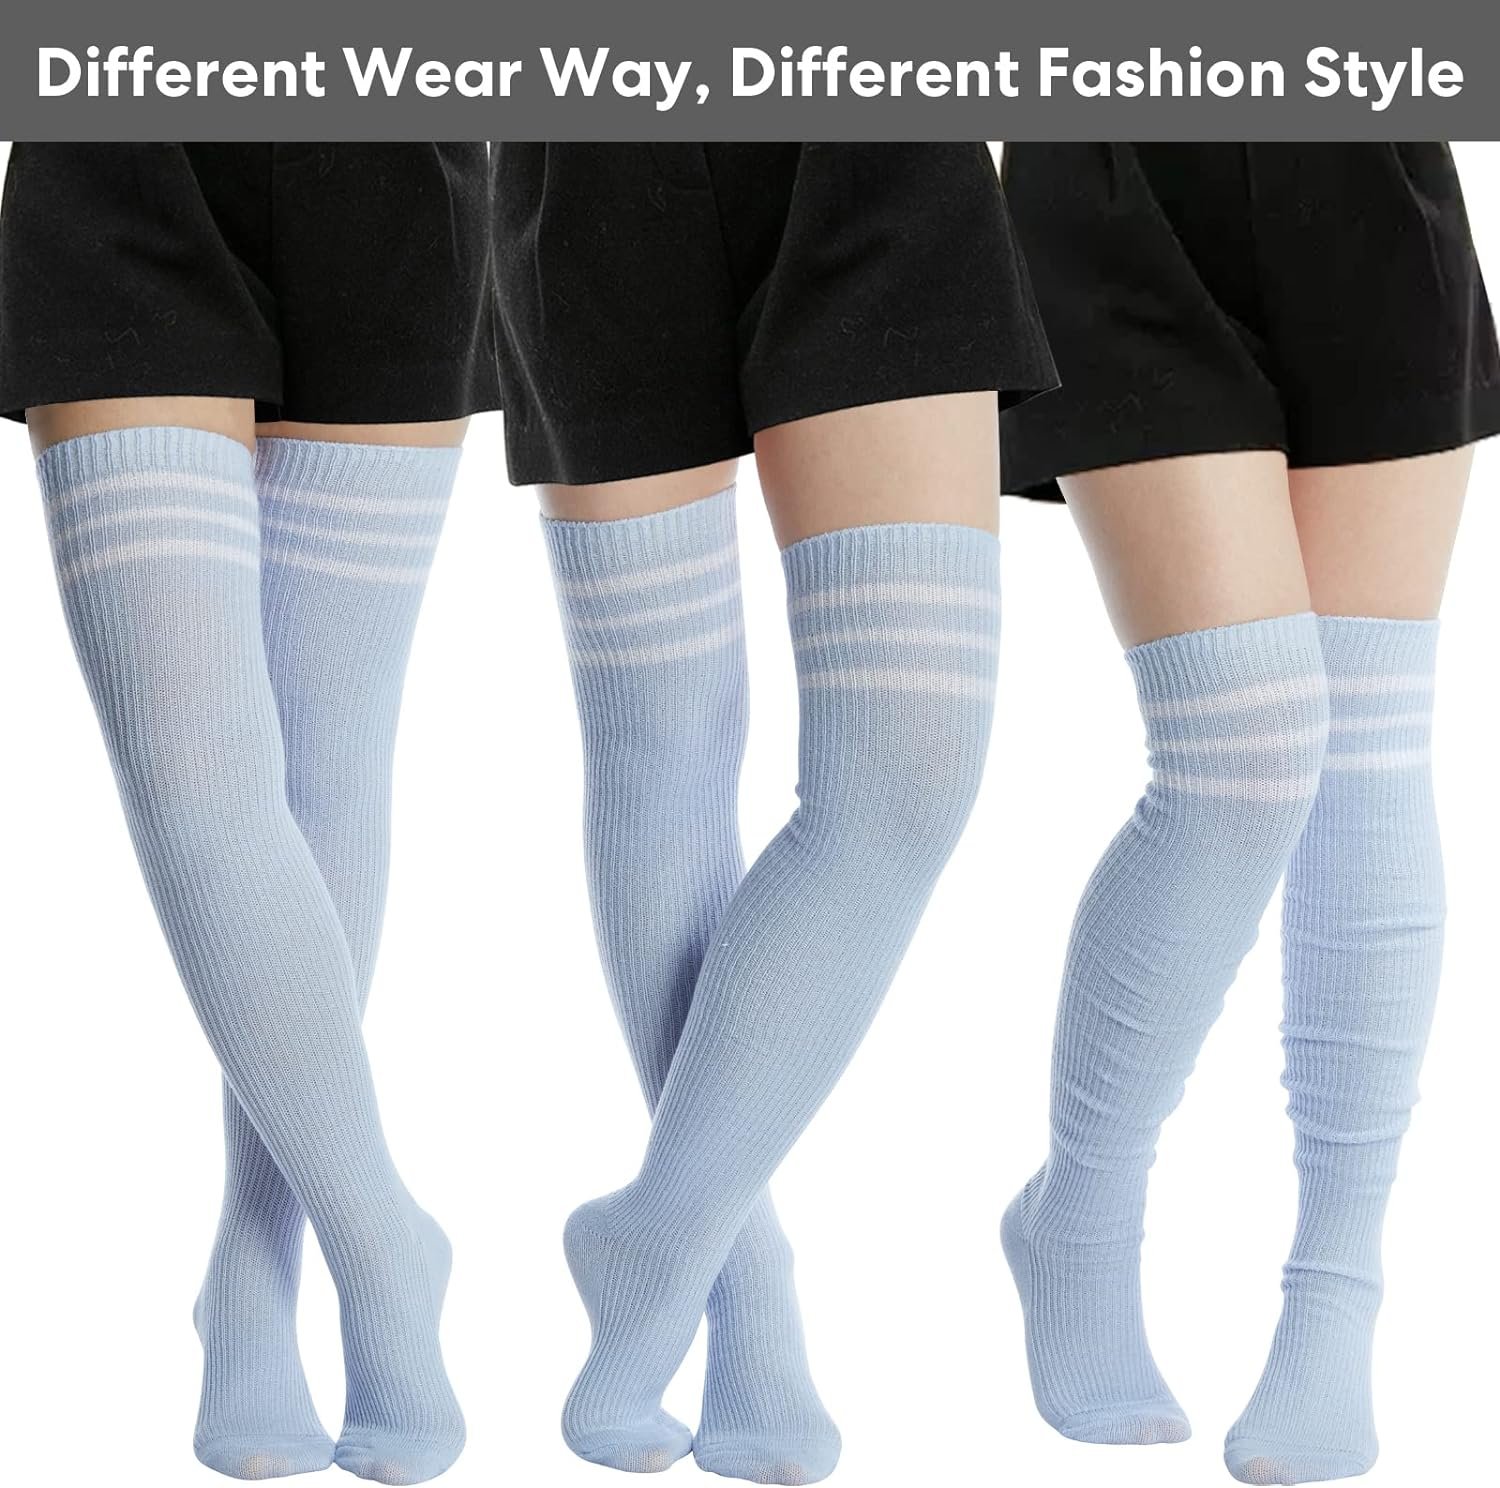 Extra Long Thigh High Socks Review